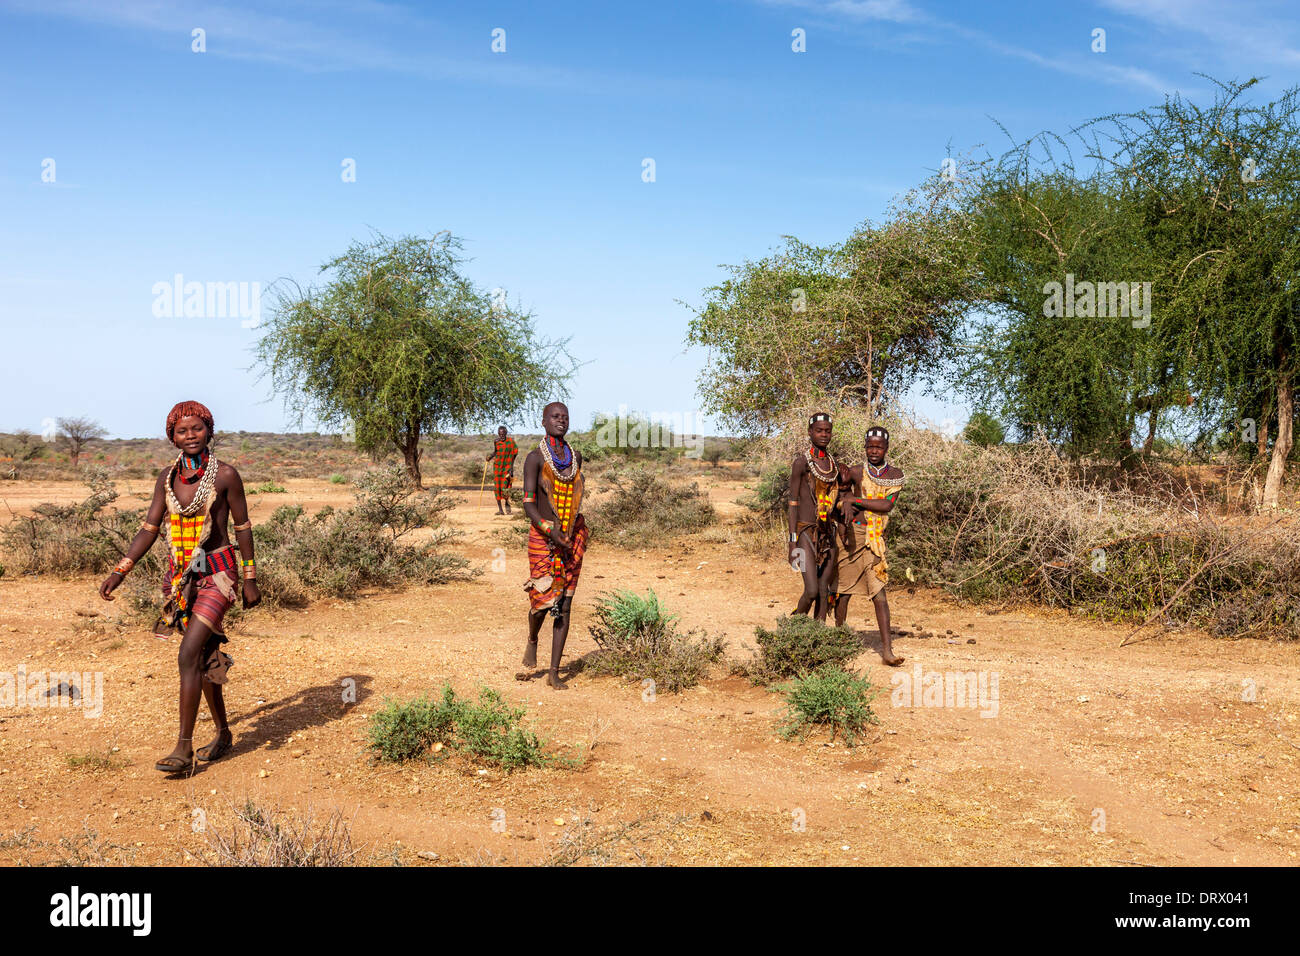 Young Women From The Hamer Tribe, Hamer Village near Turmi, Omo Valley, Ethiopia Stock Photo